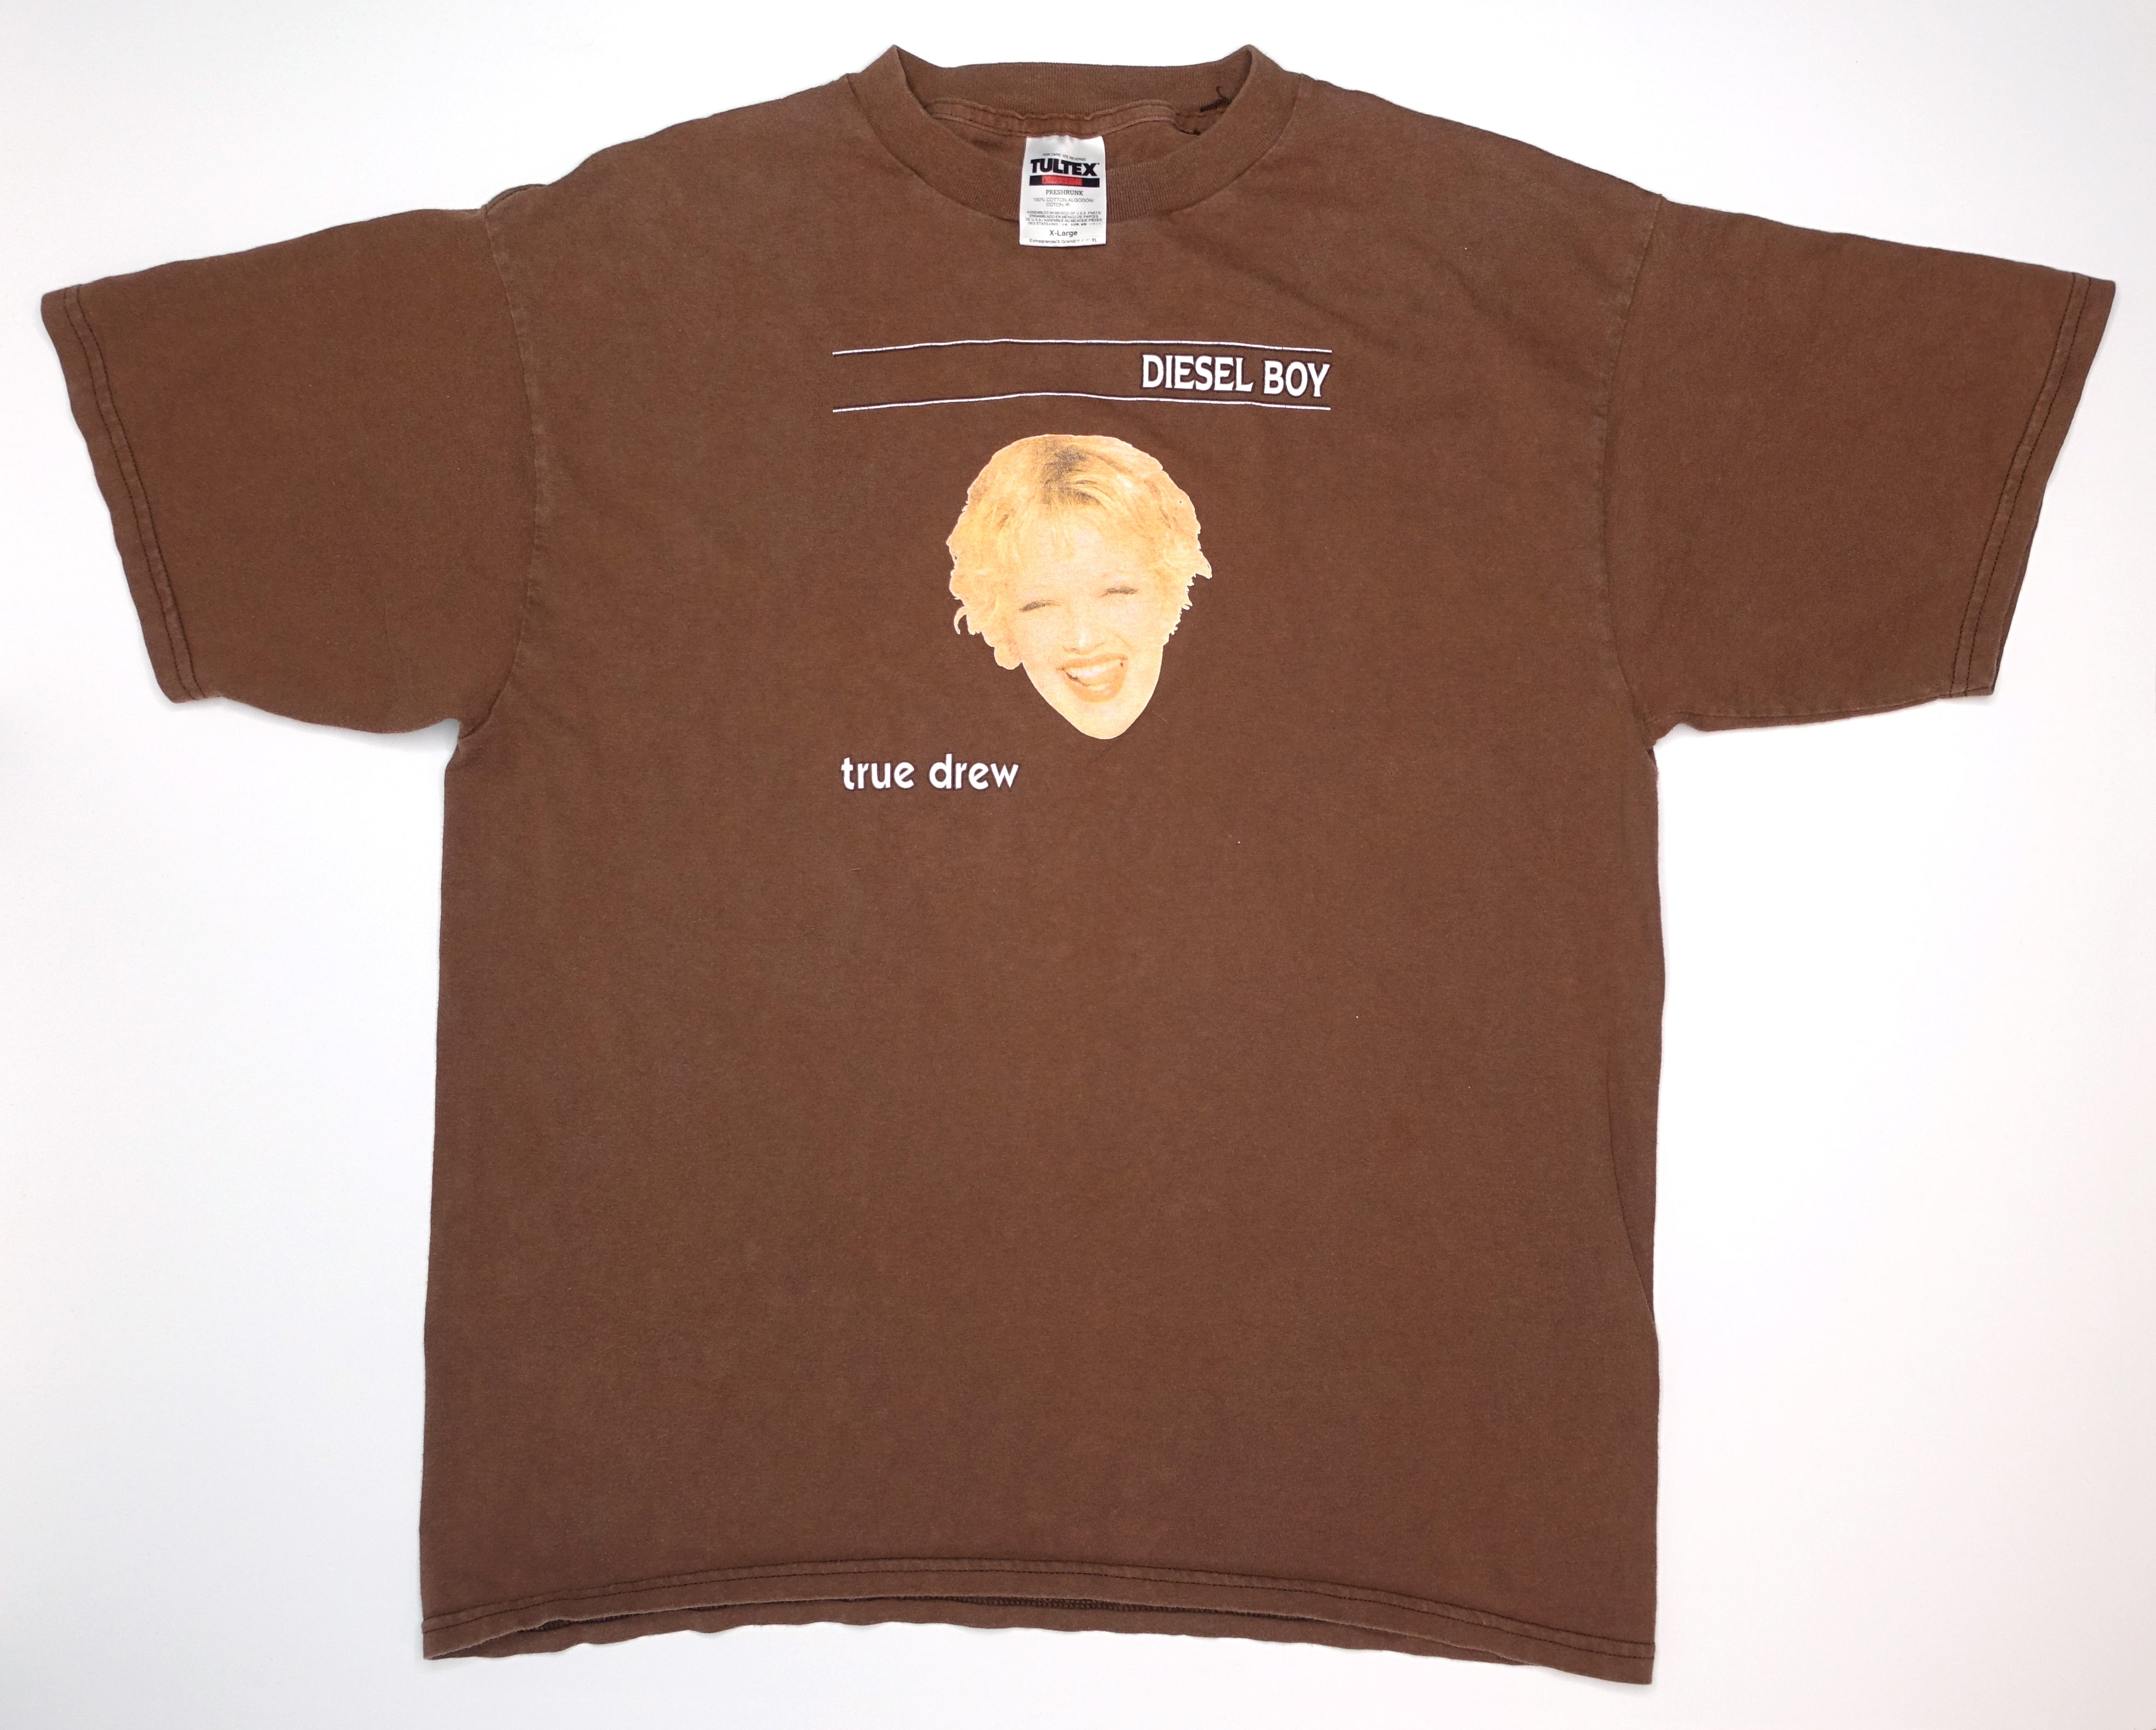 Diesel Boy – True Drew Cock Rock 1996 Tour Shirt Size XL